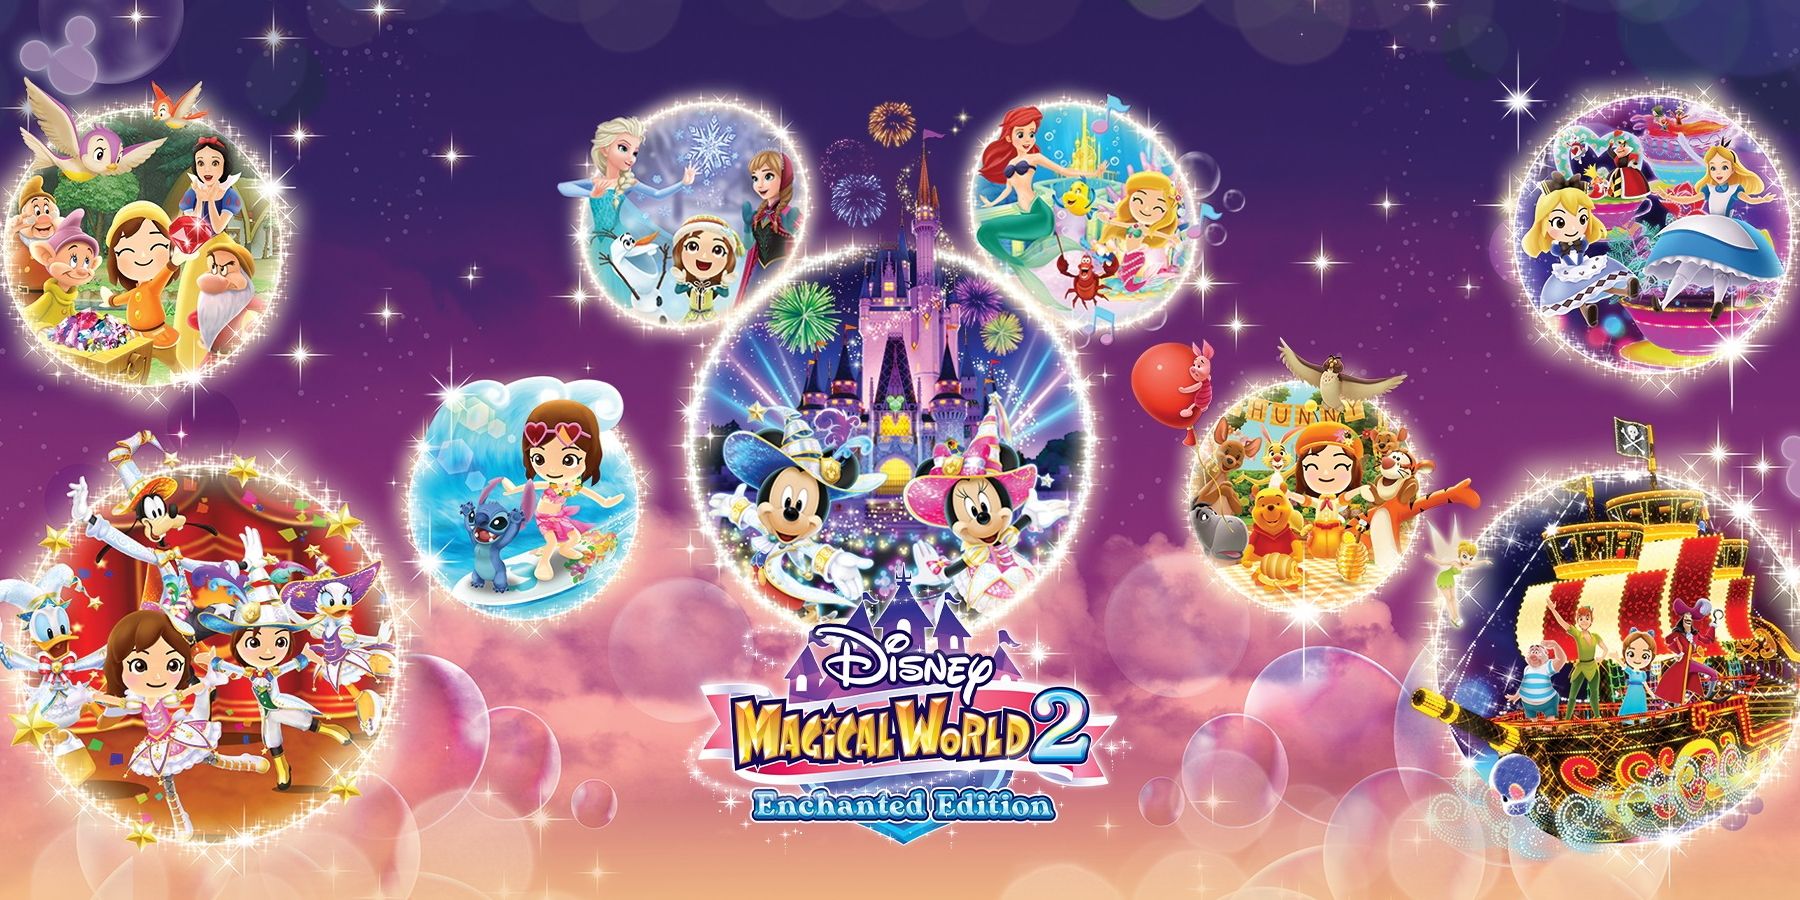 Disney Magical World 2: Enchanted Edition წელს გადართვისთვის მოდის